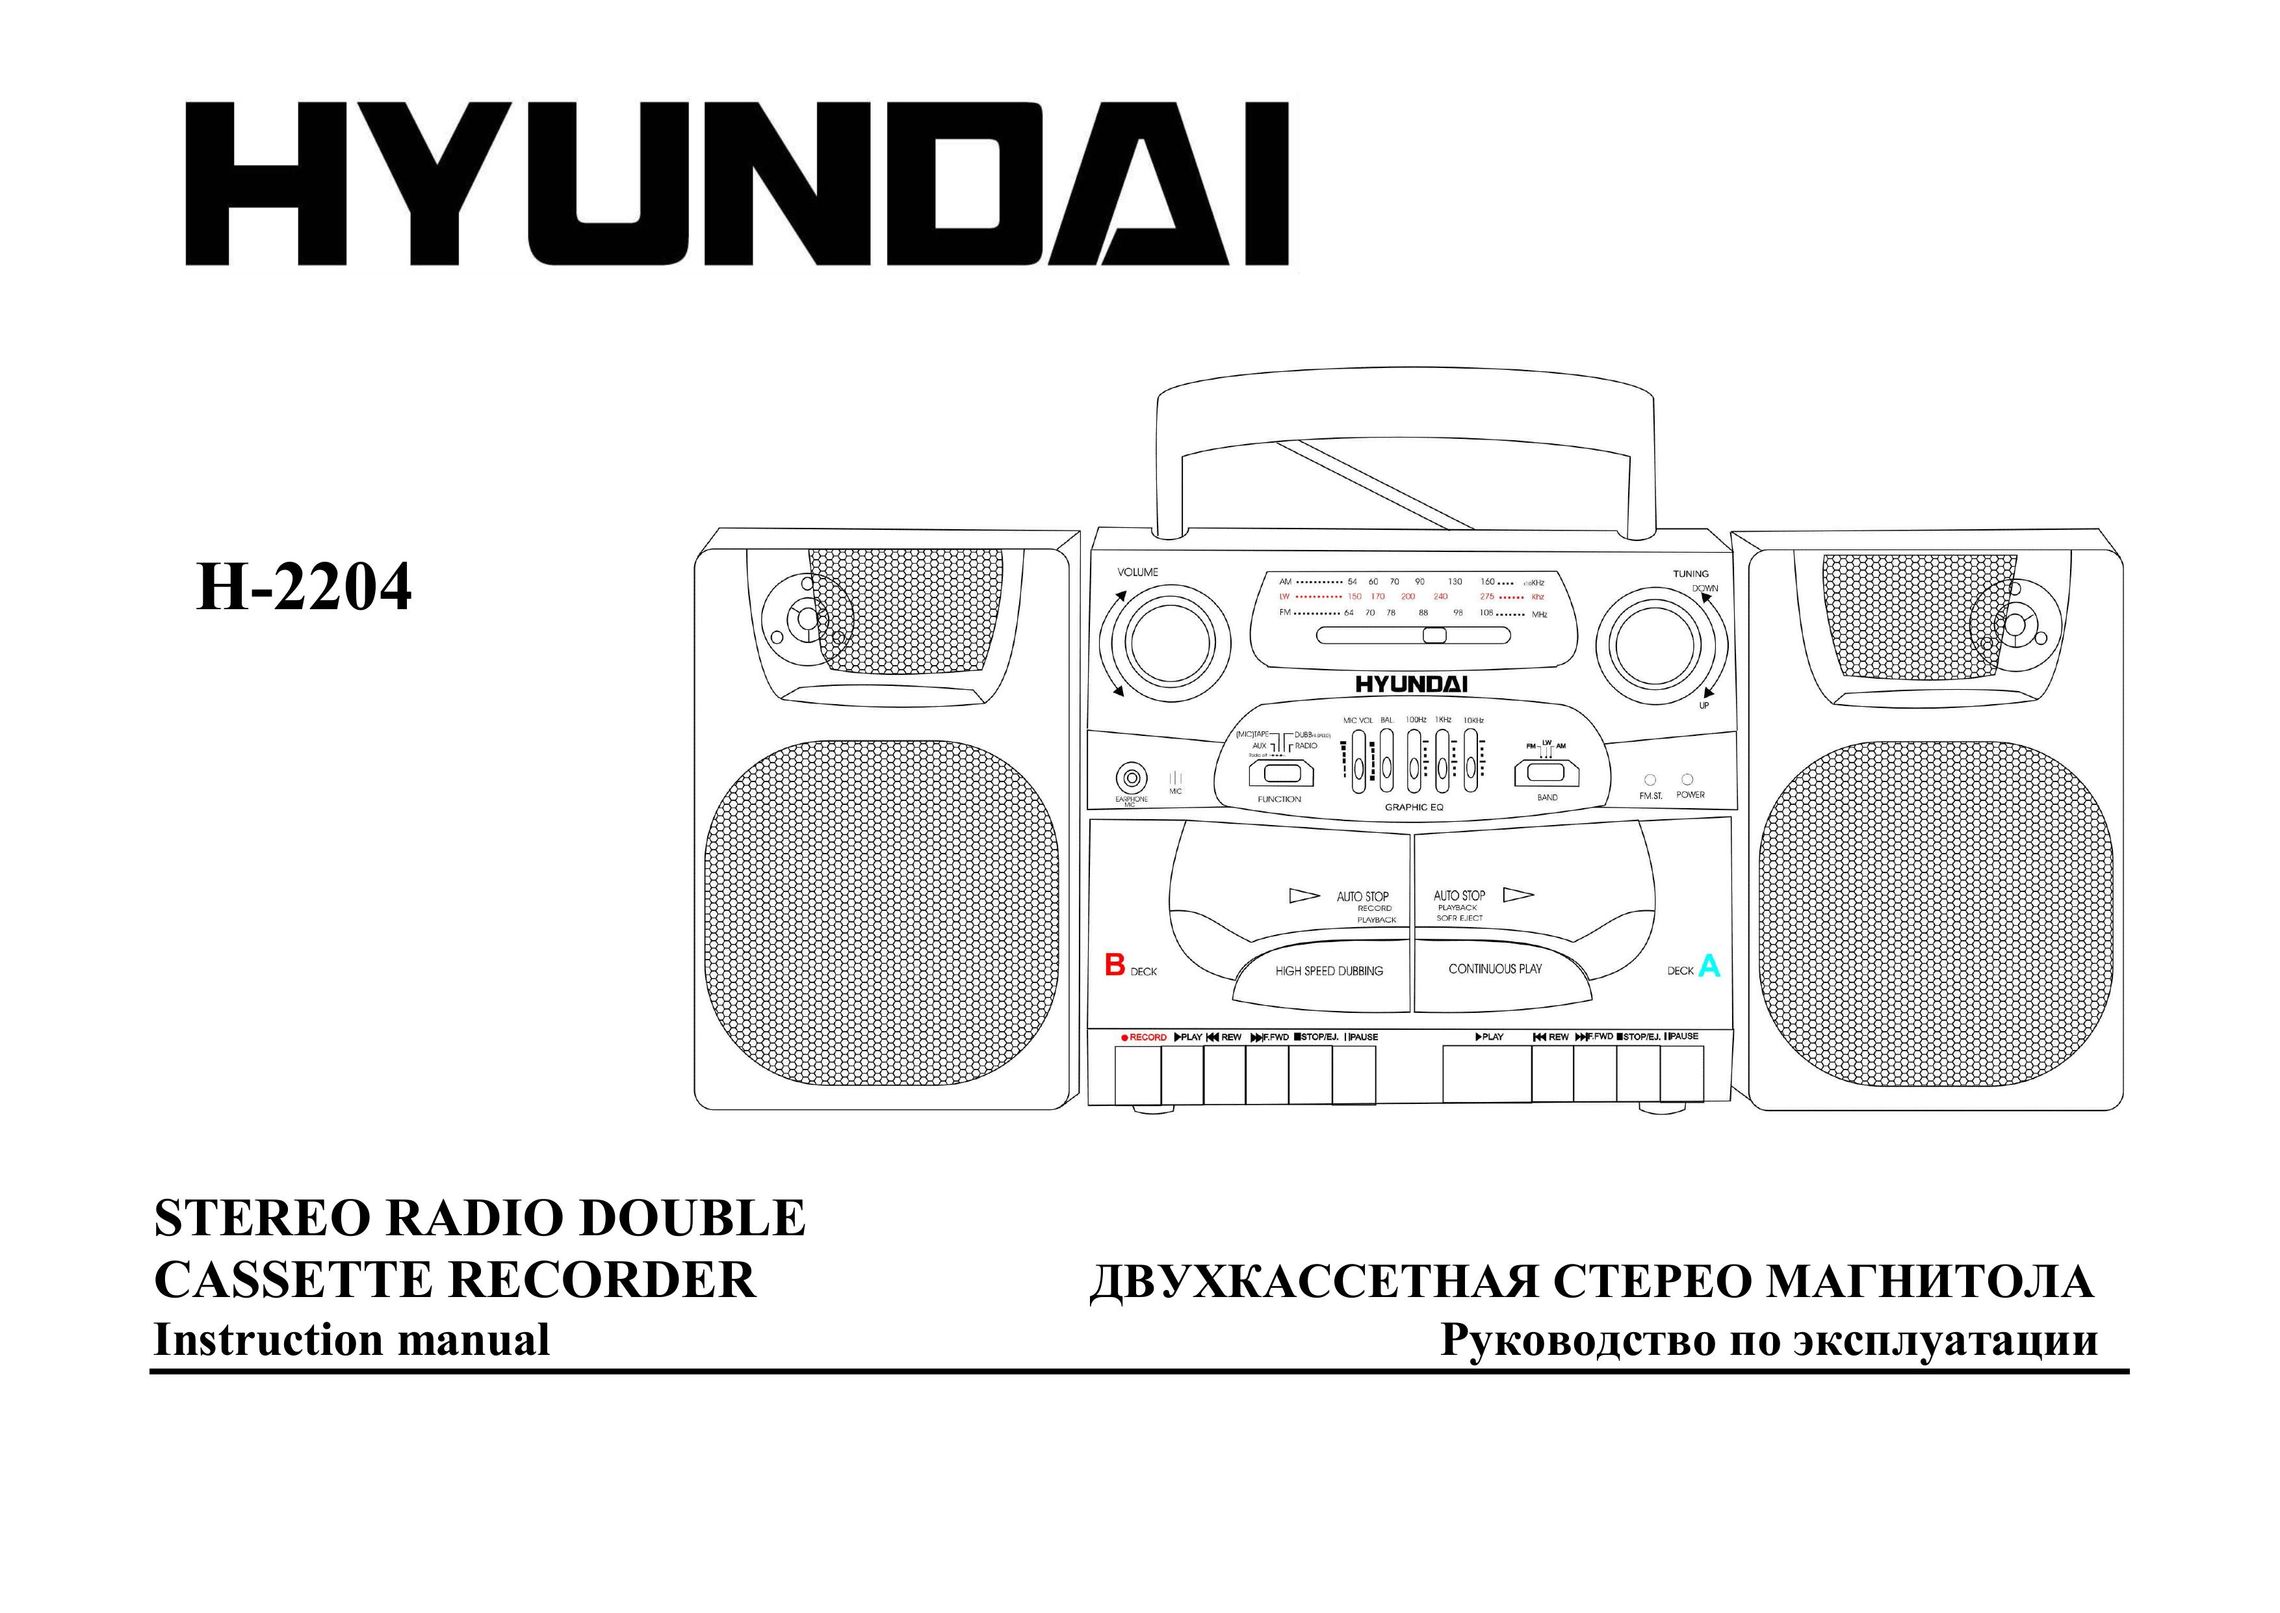 Hyundai H-2204 Cassette Player User Manual